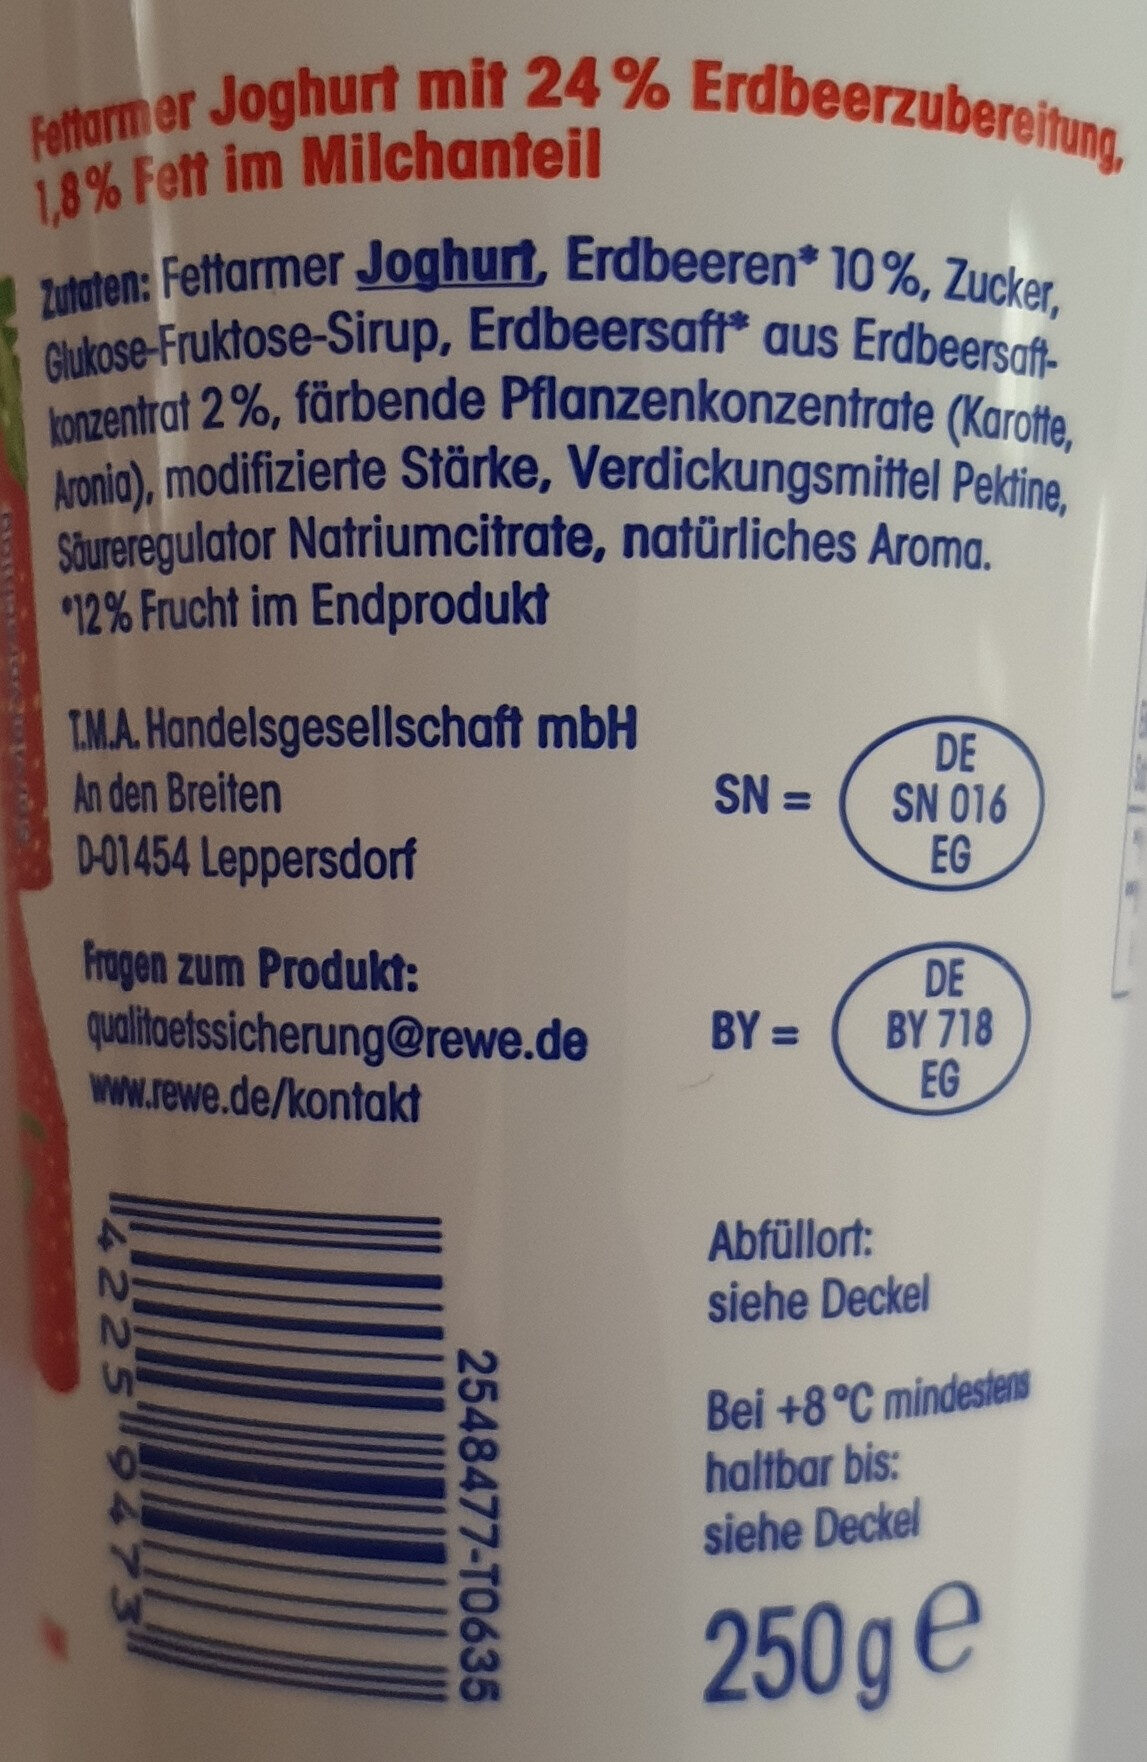 Fettarmer Joghurt Erbeere, 1,8% Fett im Milchanteil - Zutaten